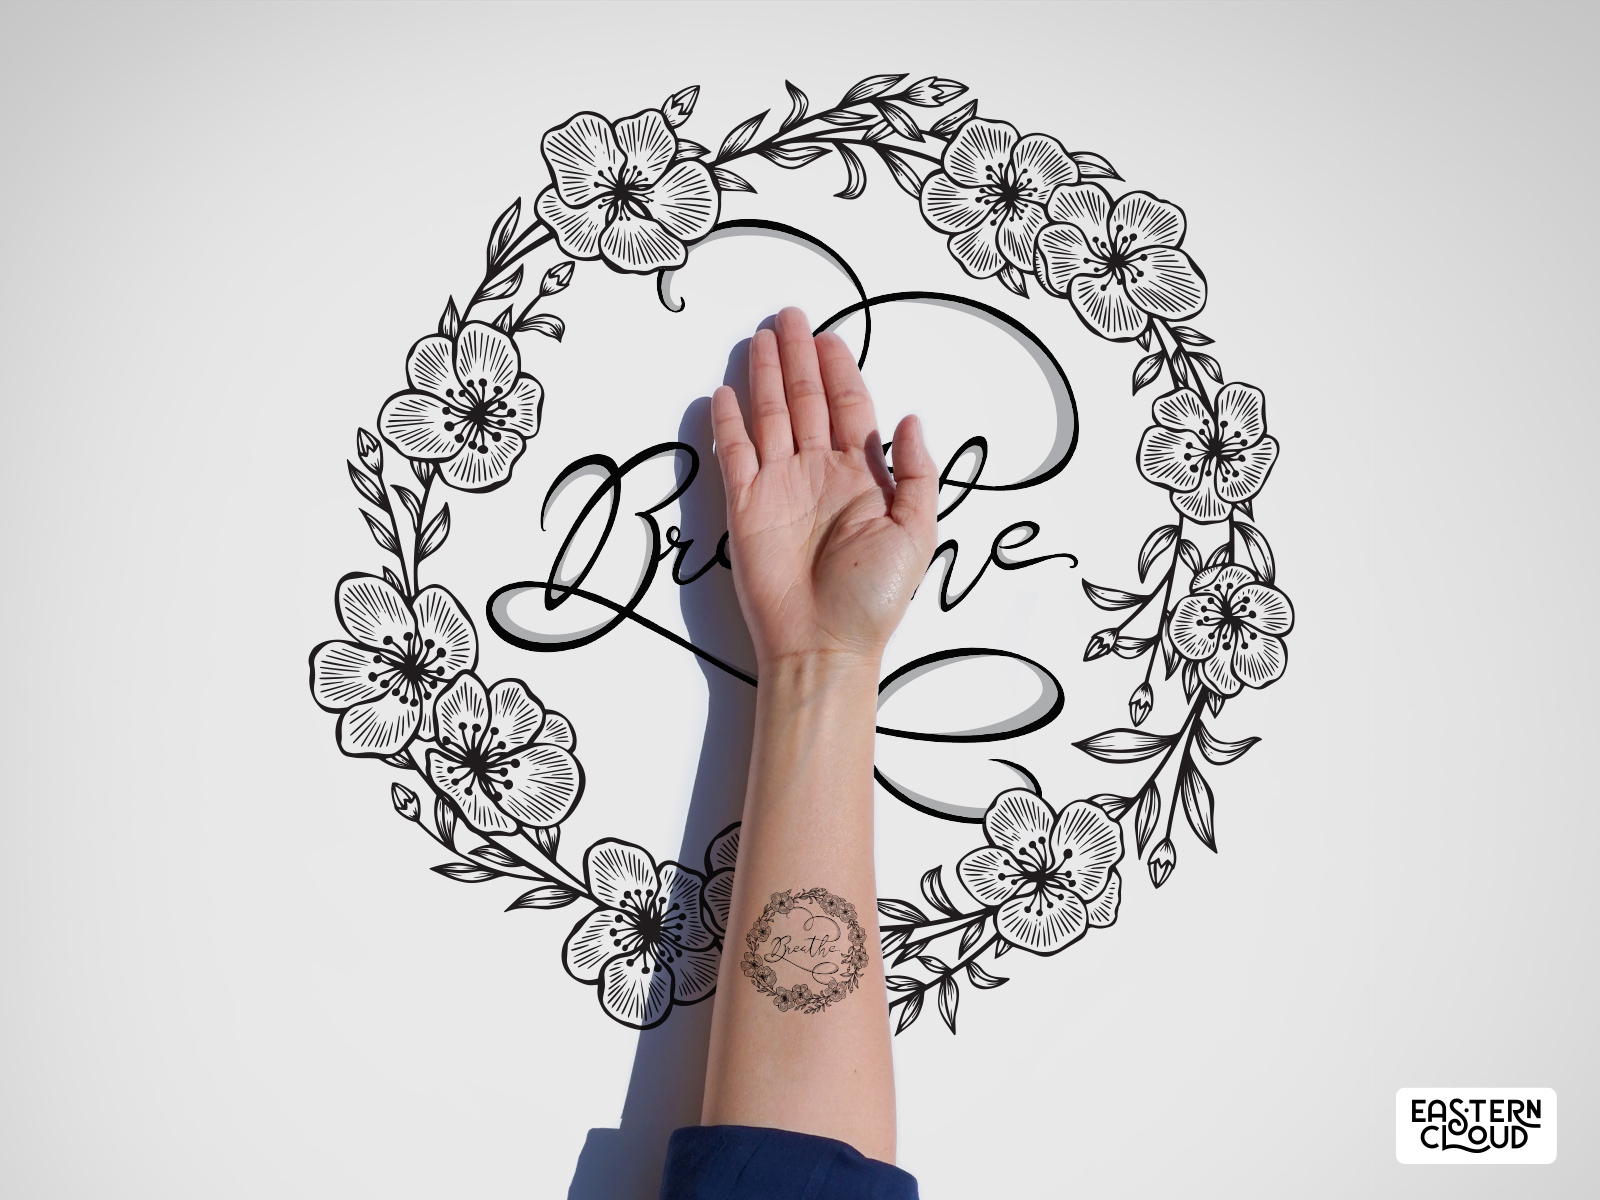 101 Amazing Japanese Cloud Tattoo Ideas That Will Blow Your Mind! |  Japanese cloud tattoo, Cloud tattoo design, Cloud tattoo